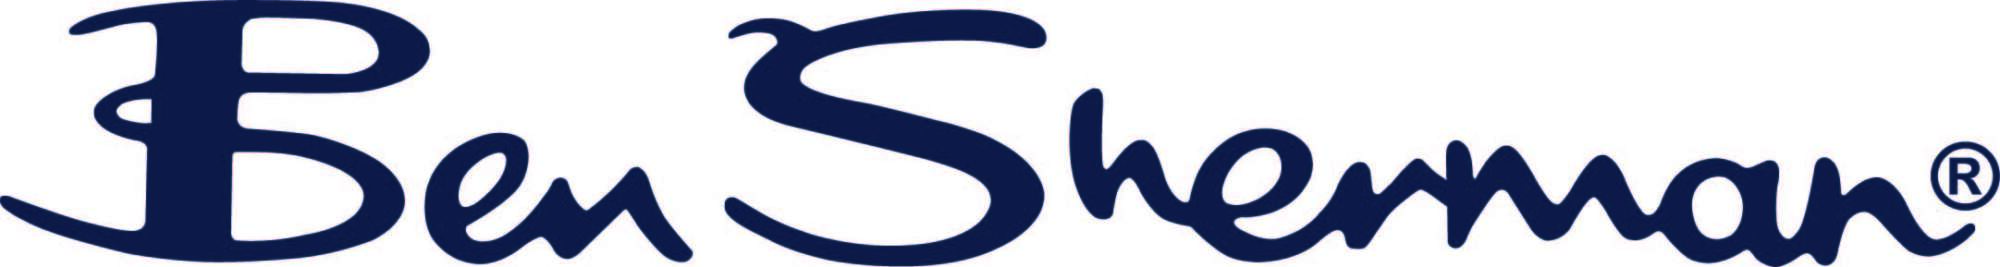 BenSherman-logo : CALA MEN'S SHOW